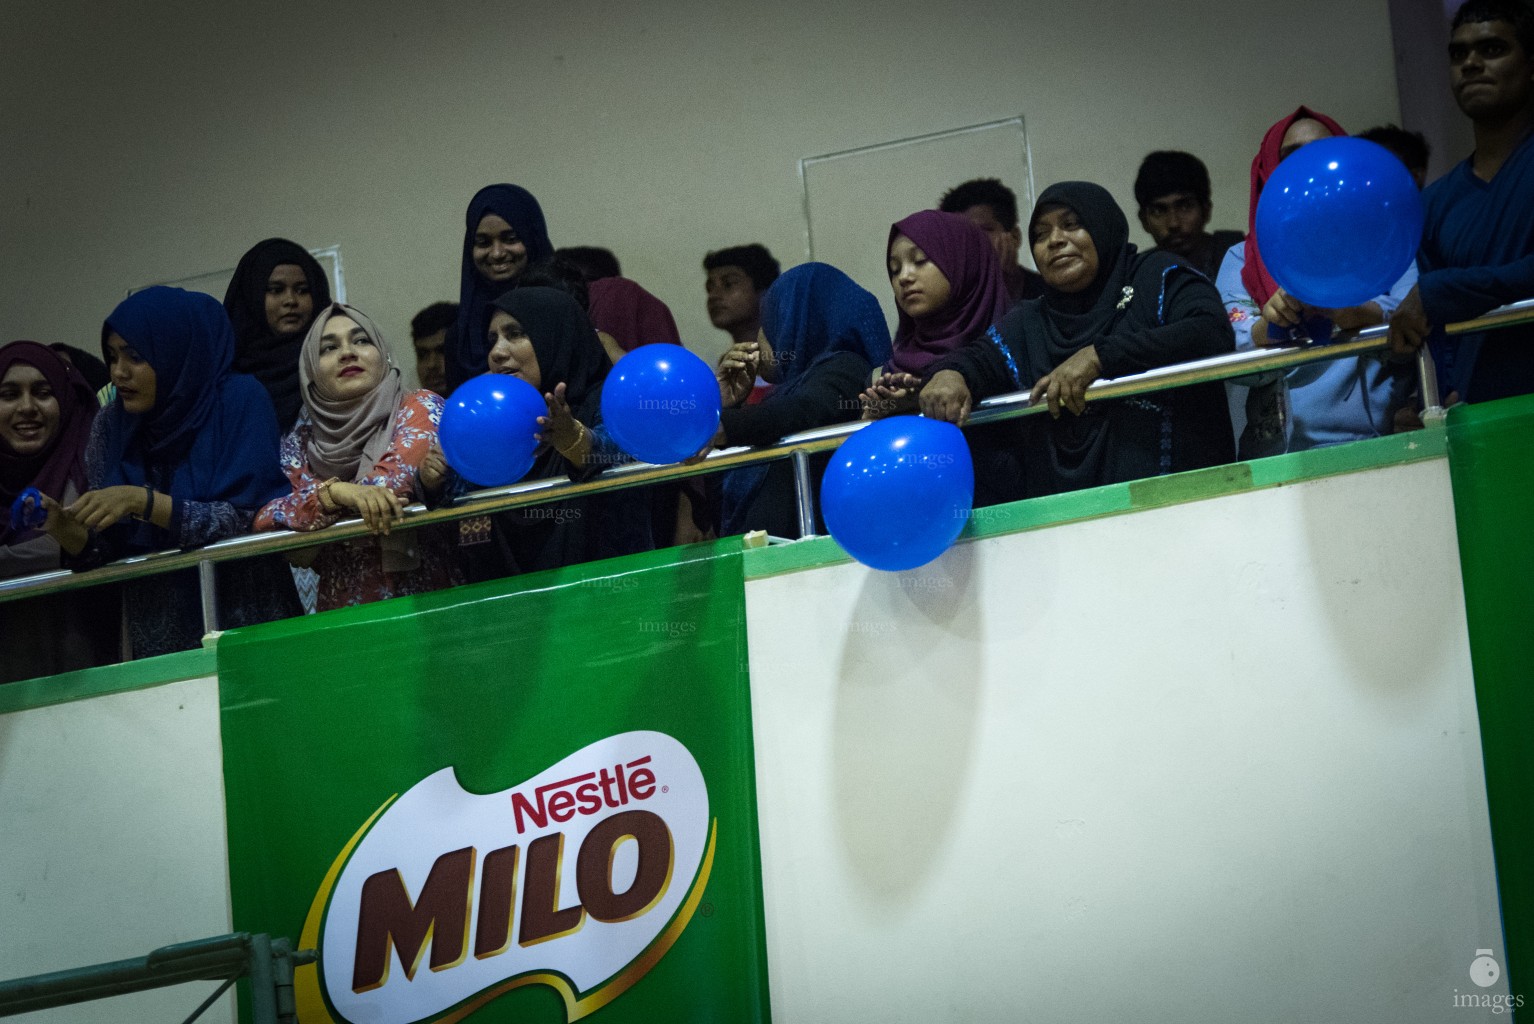 MILO Interschool Volleyball Tournament 2018 (U16 Boys Final)